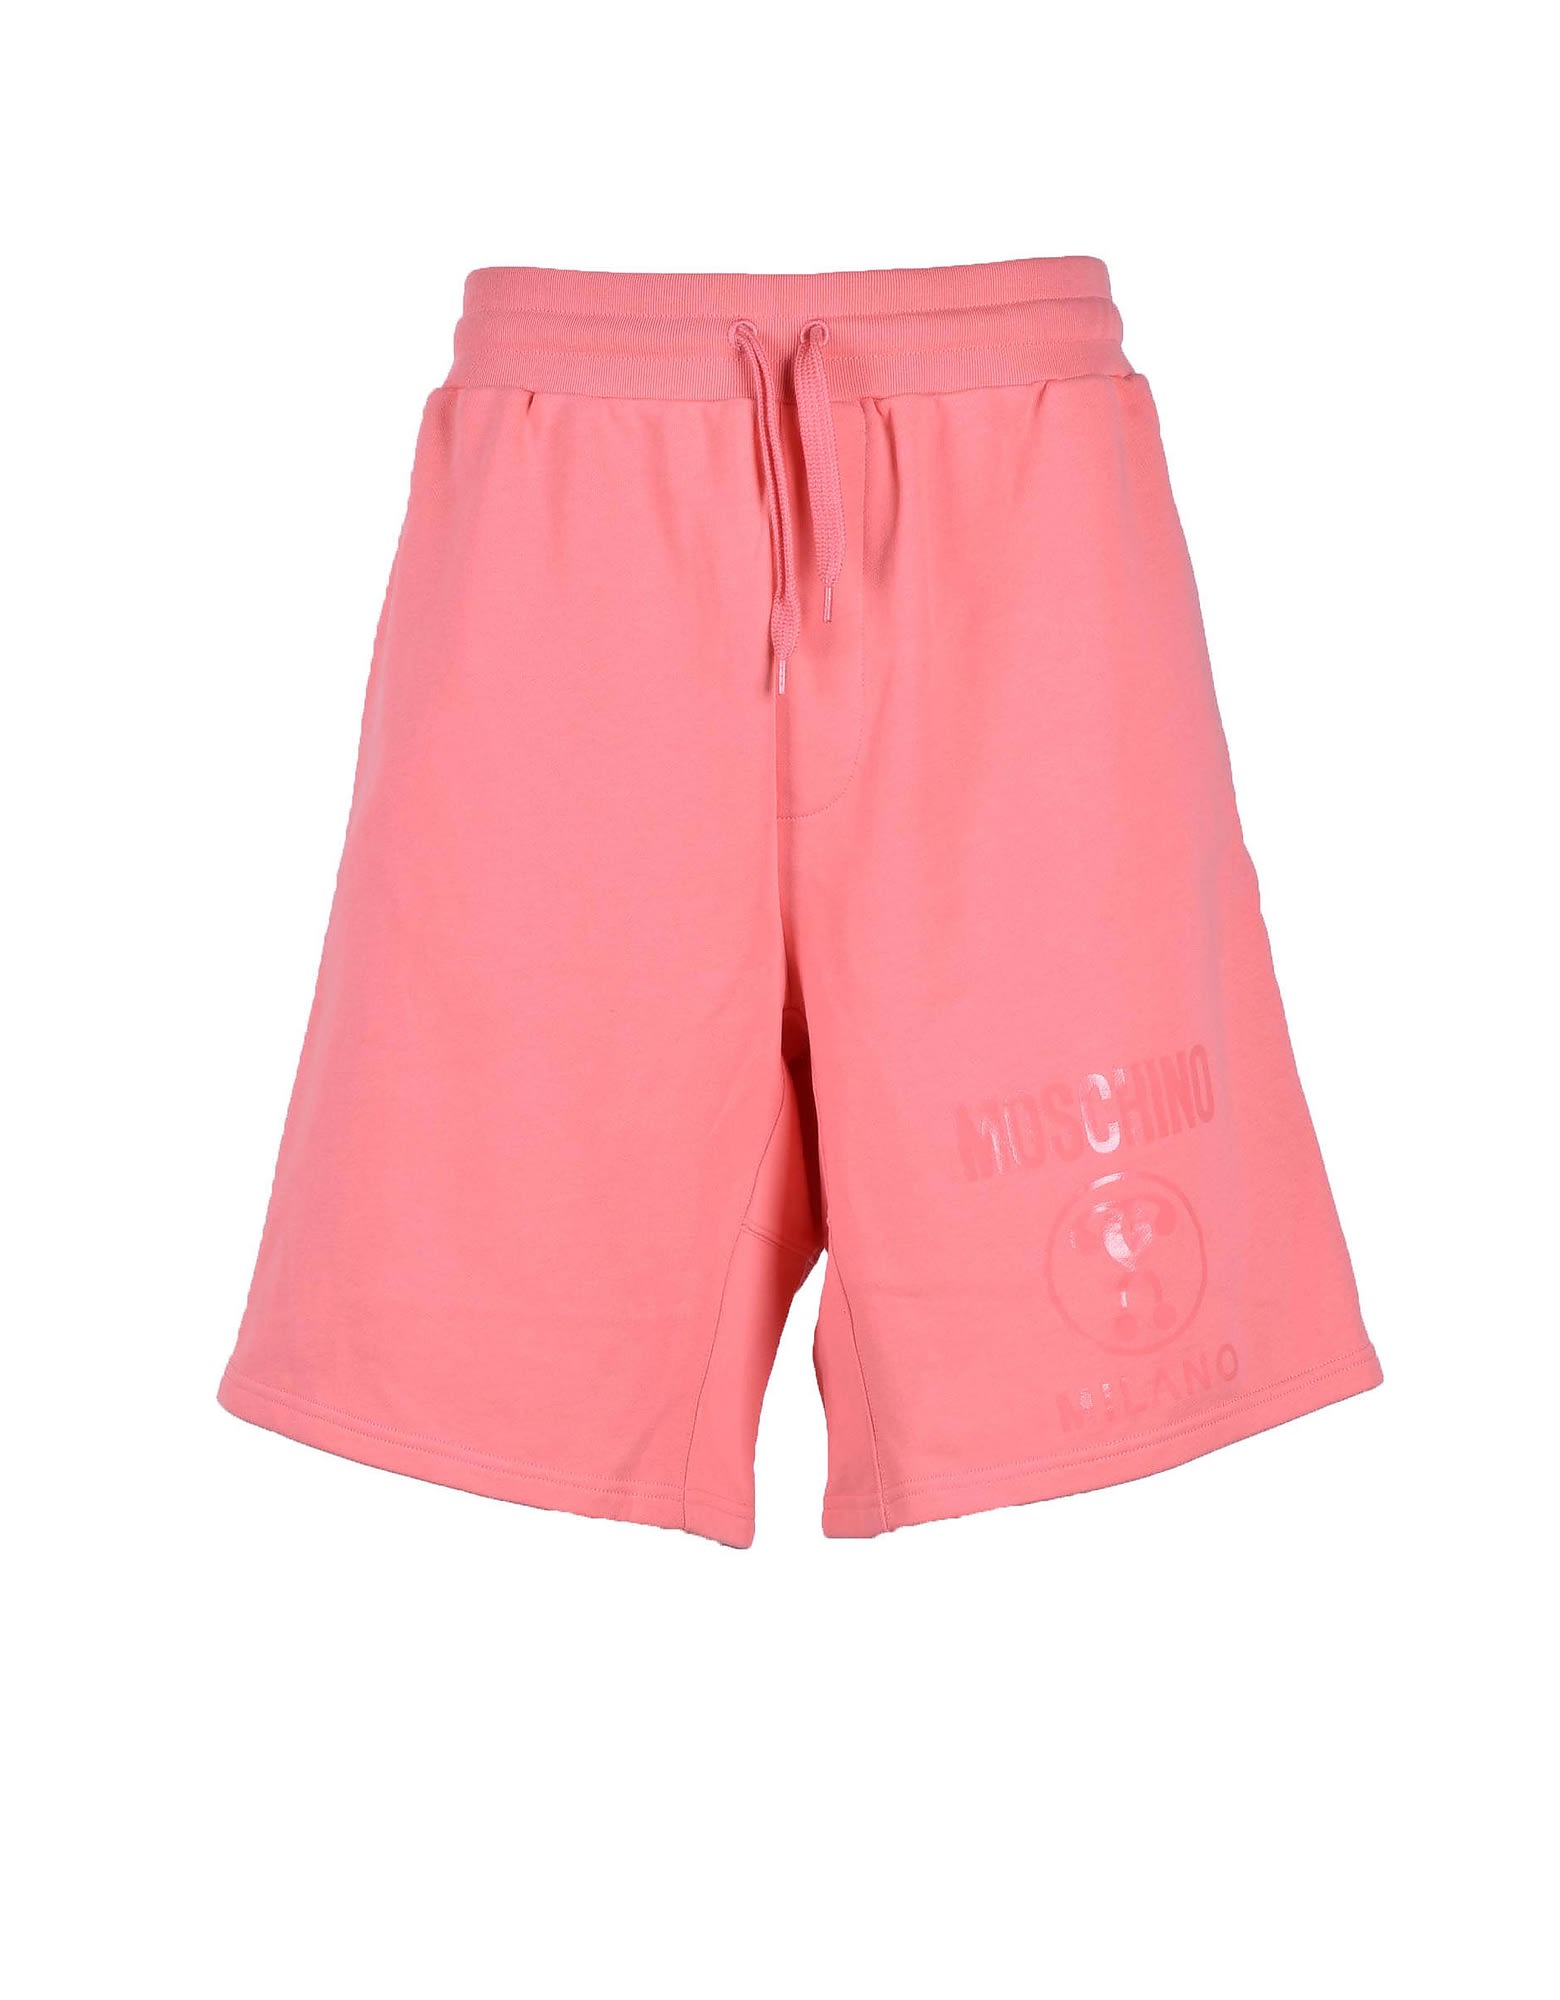 Moschino Mens Pink Bermuda Shorts